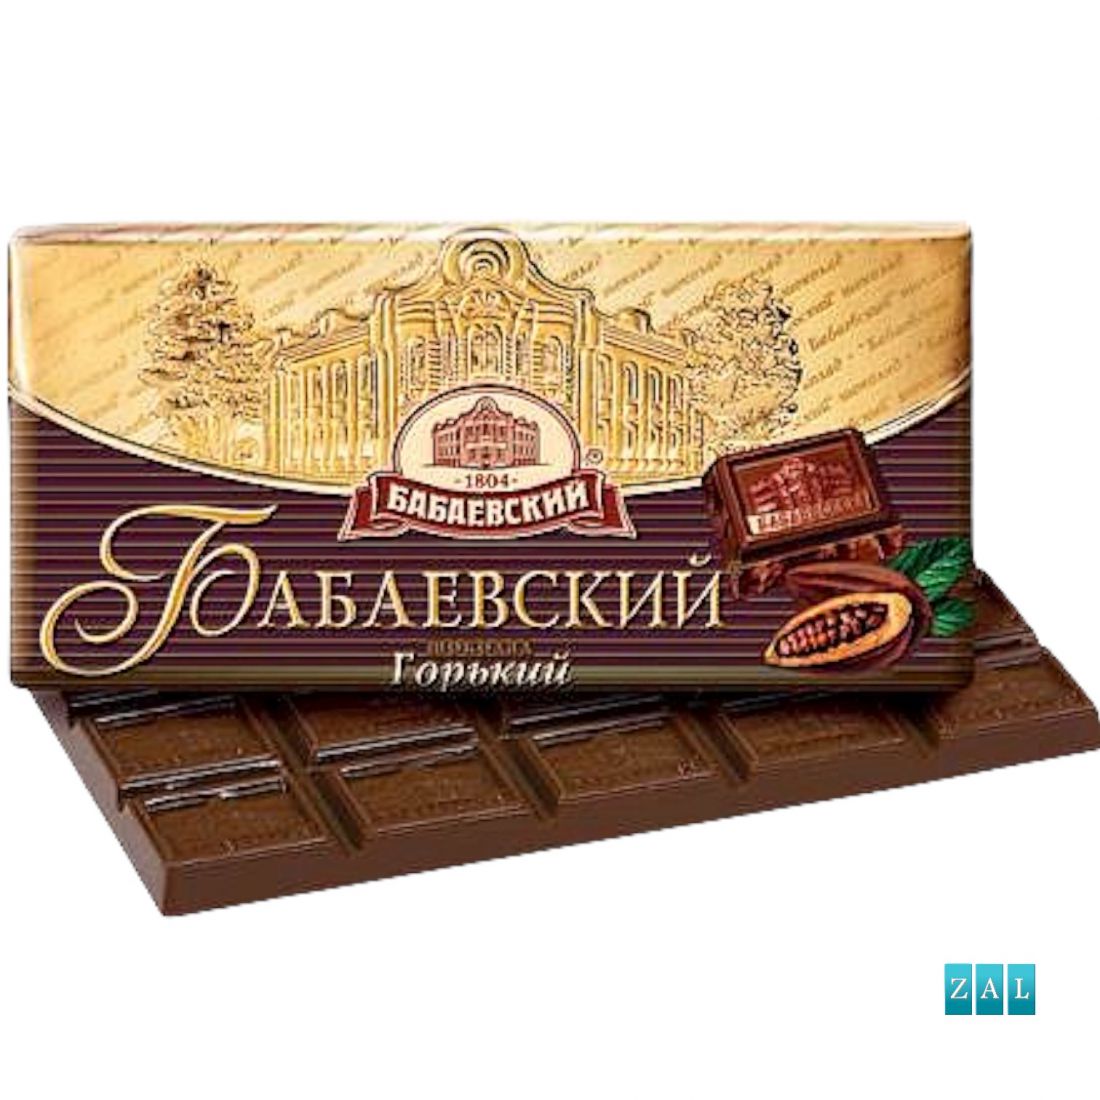 ”Babaevsky” étcsokoládé Keserű 100g